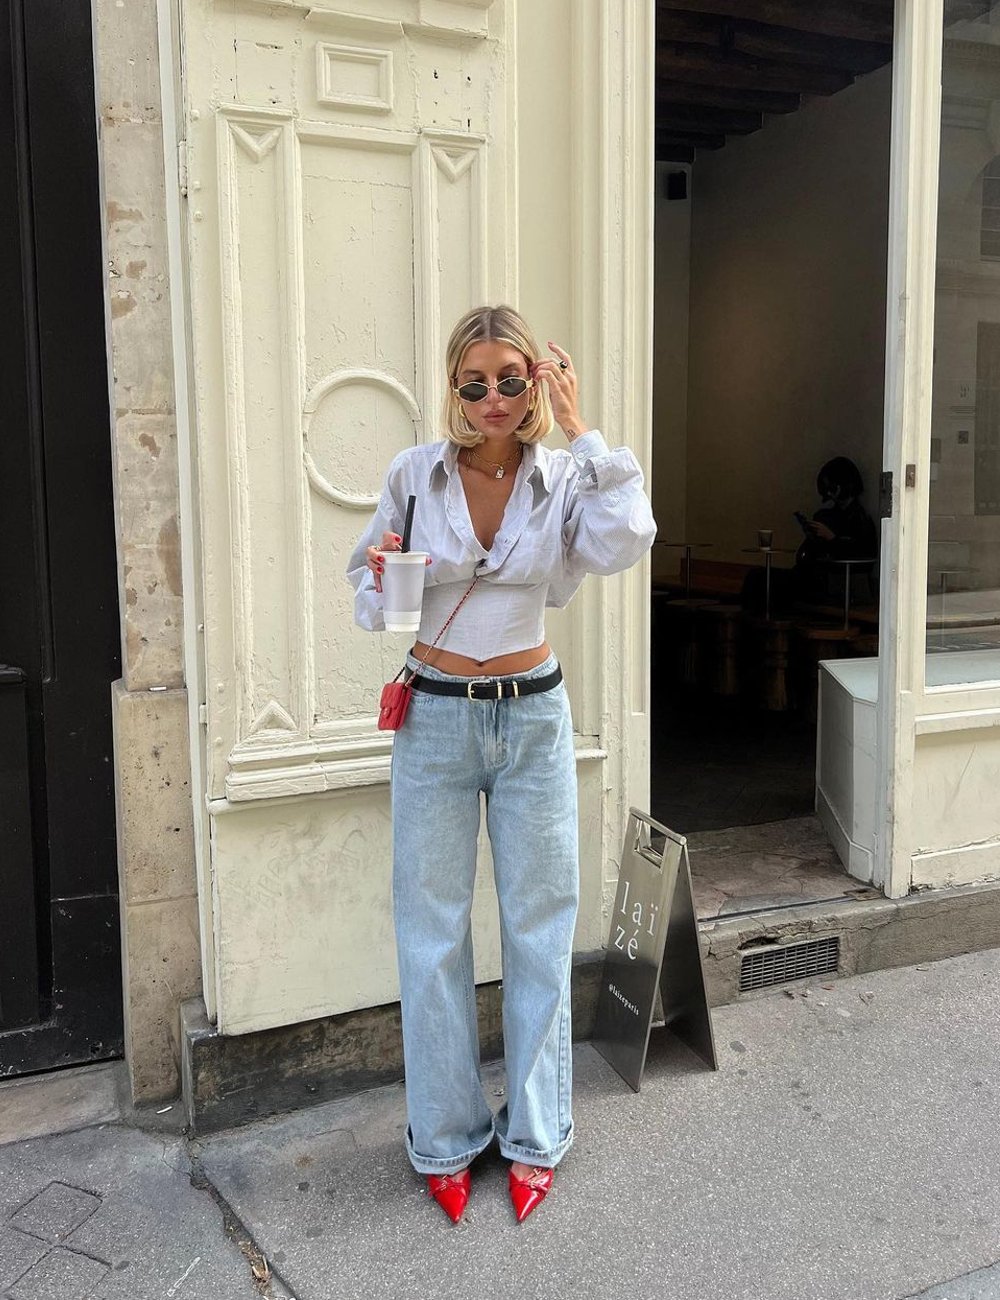 Audrey Afonso - calça - Looks com pantalona jeans - styling - street style - https://stealthelook.com.br